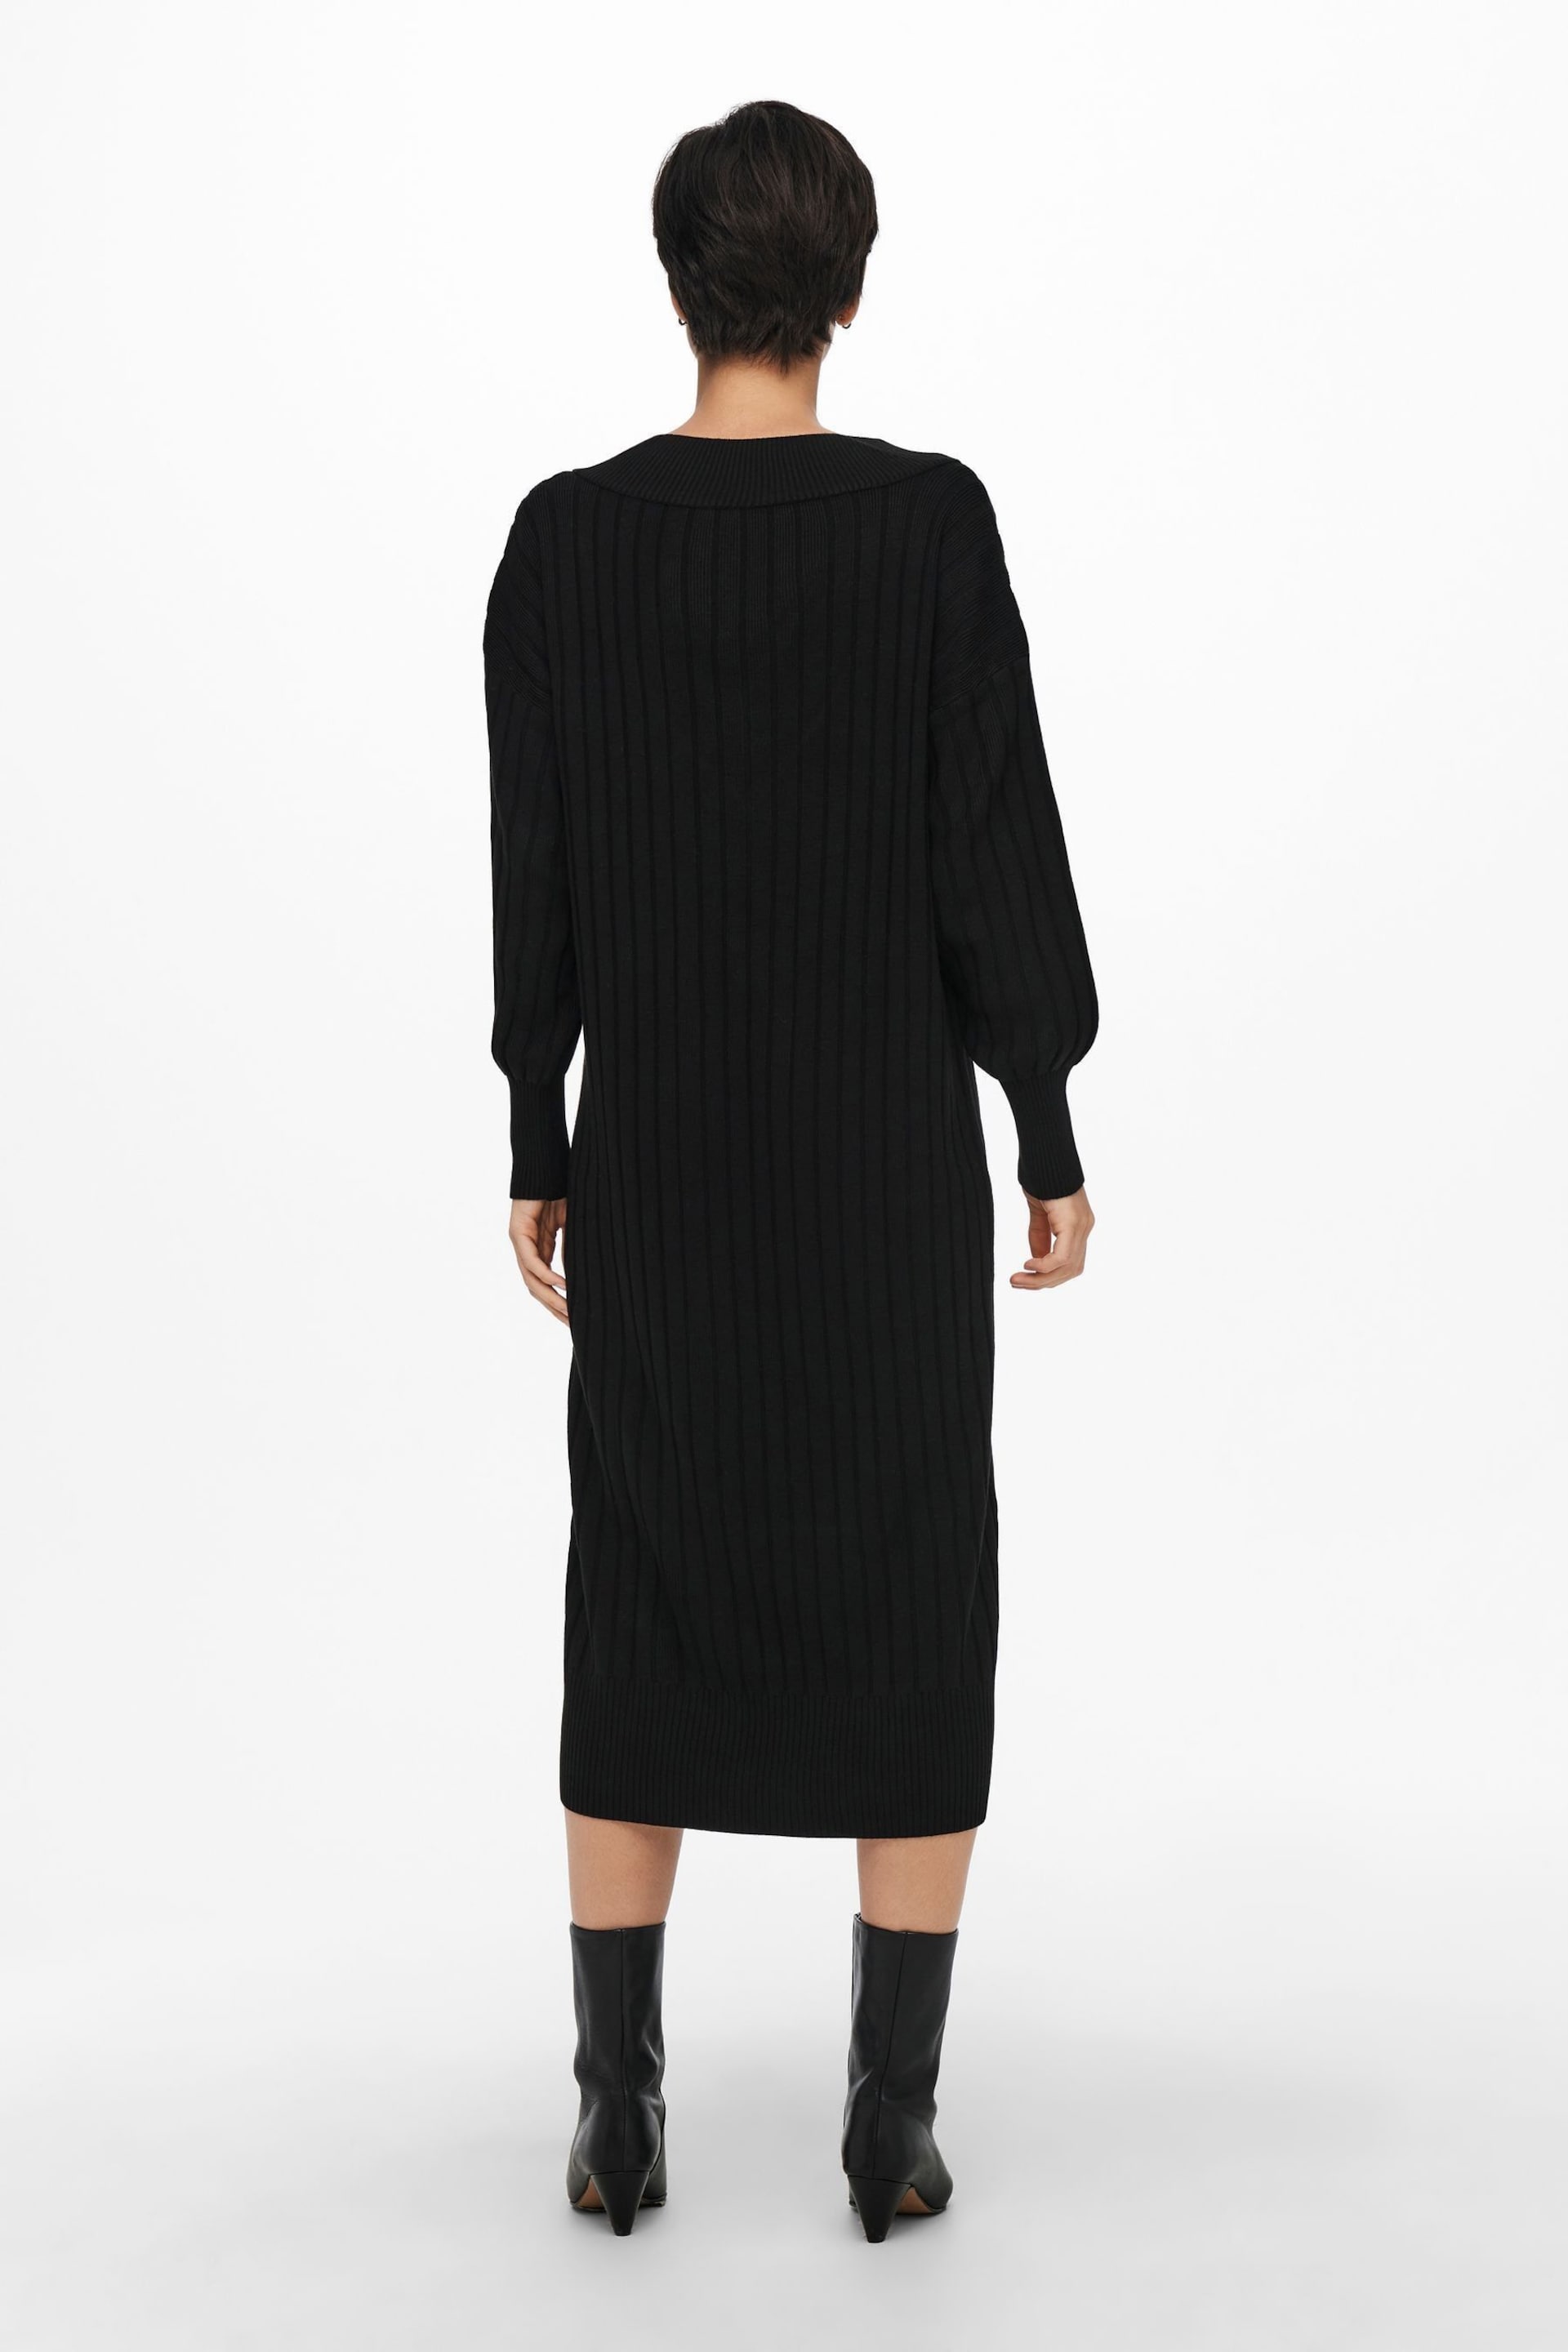 ONLY Black V-Neck Midi Knitted Jumper Dress - Image 2 of 6